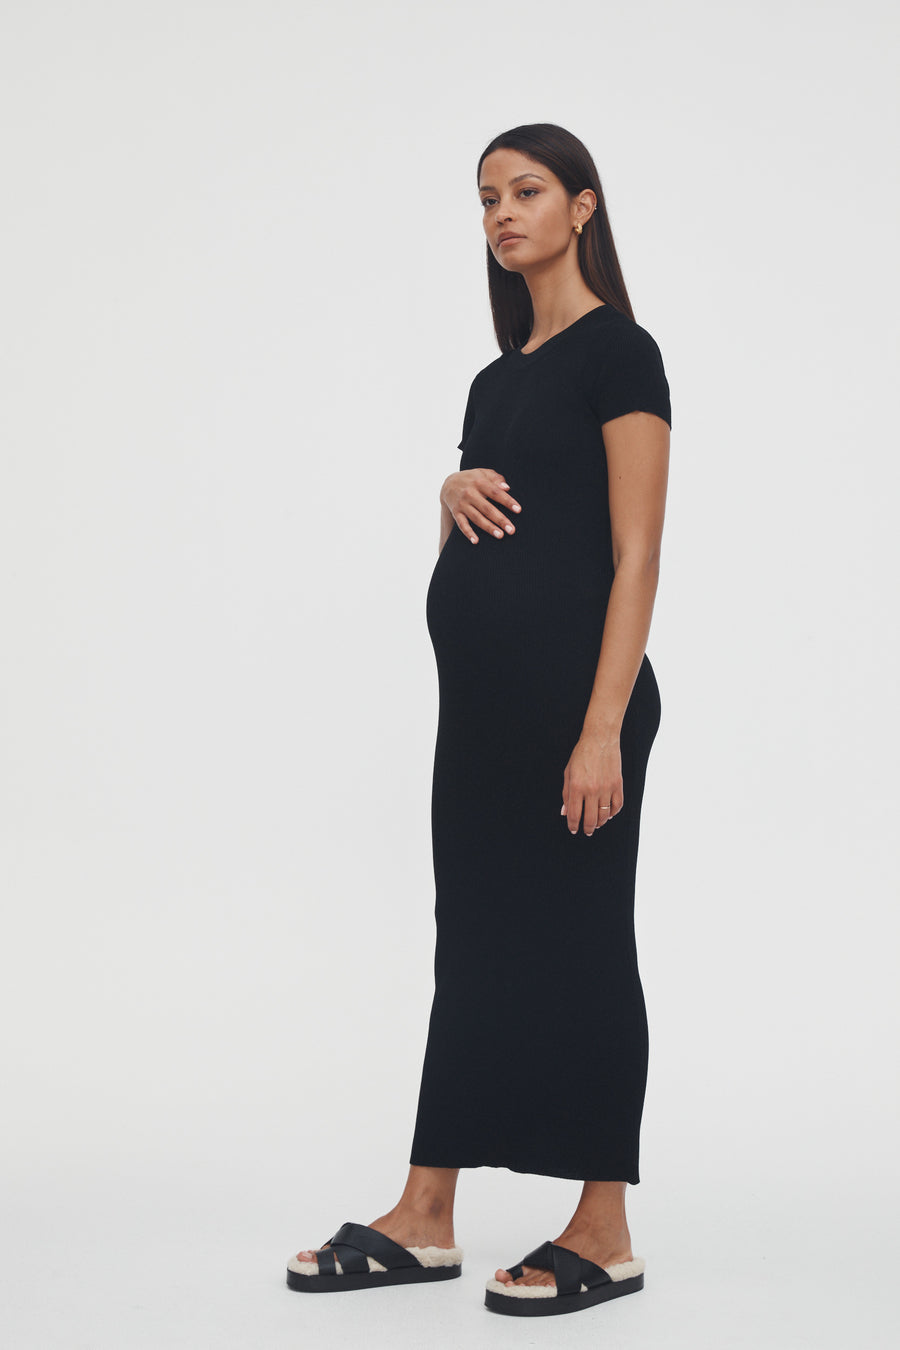 Stylish Babyshower Dress (Black) 4